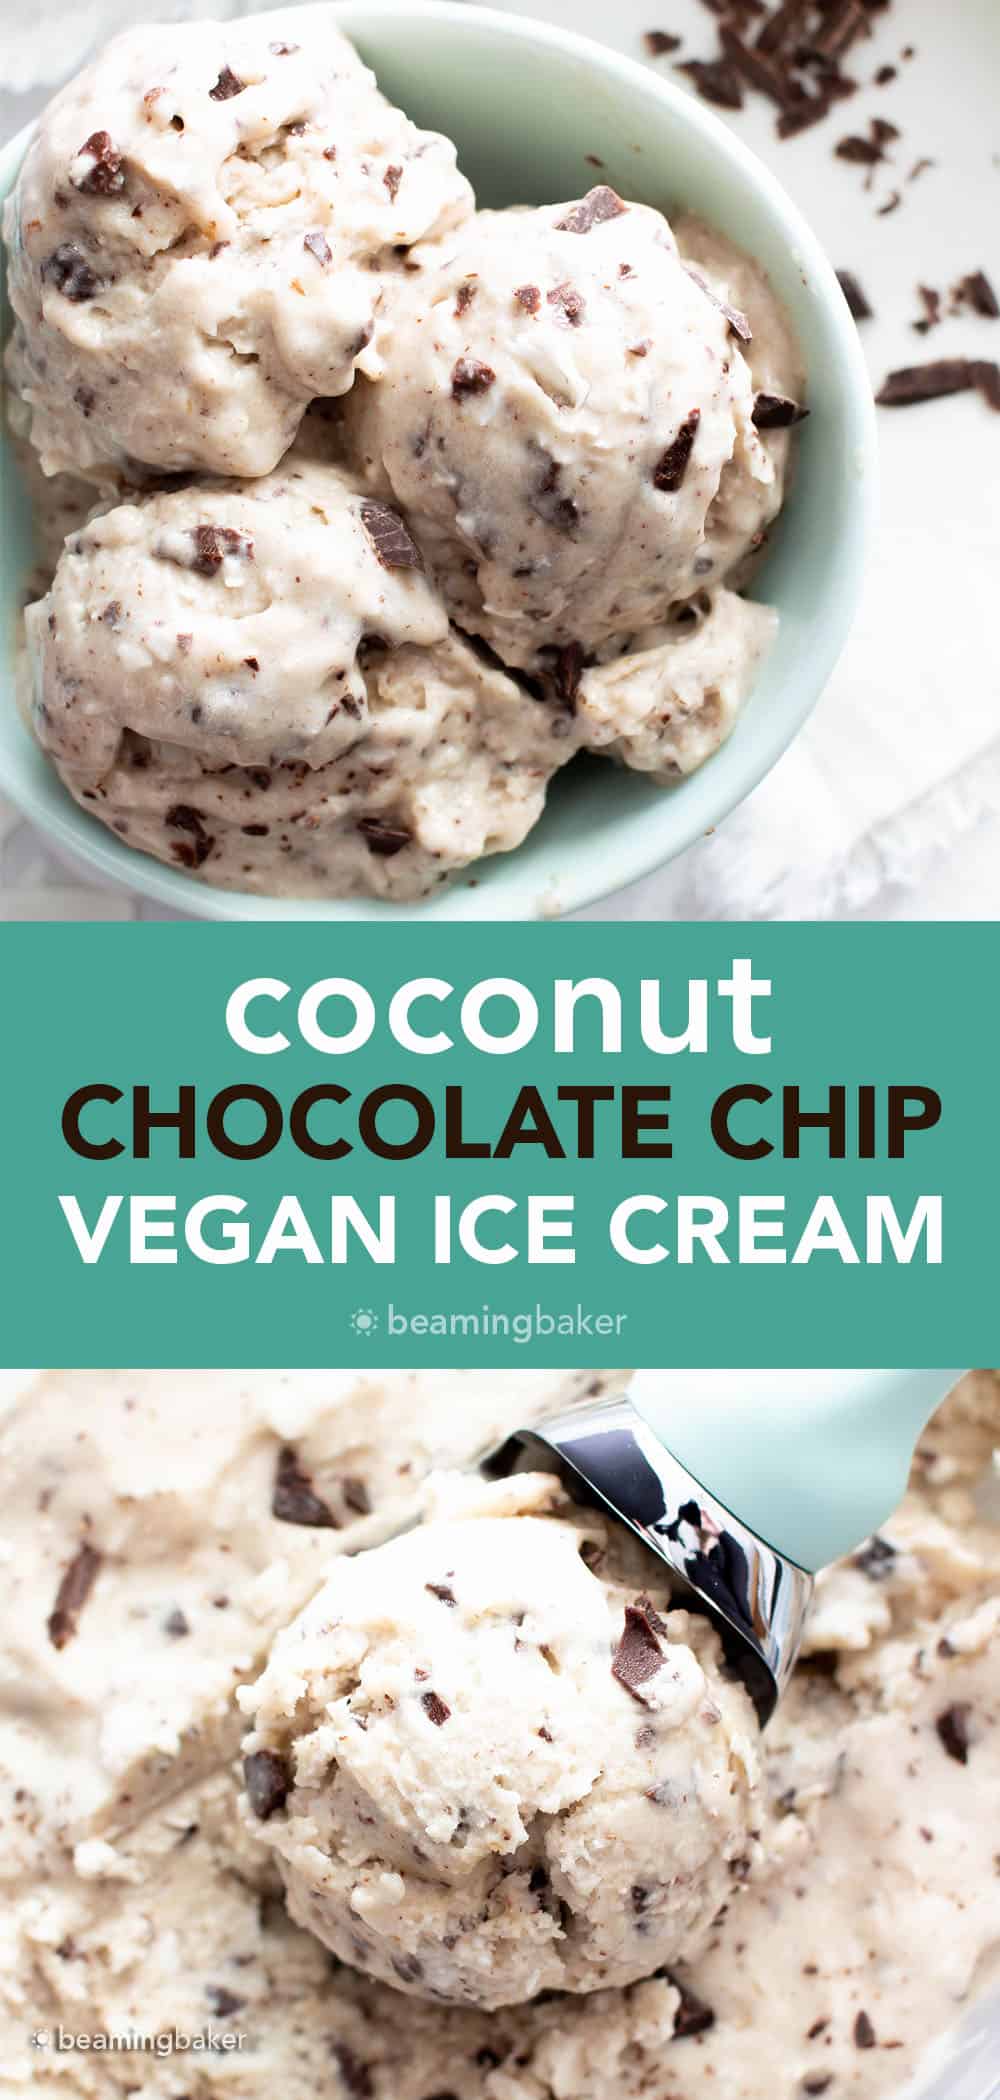 https://beamingbaker.com/wp-content/uploads/2014/01/MEDIUM-PIN-Coconut-Chocolate-Chip-Vegan-Ice-Cream-Recipe-%E2%80%93-Homemade.jpg